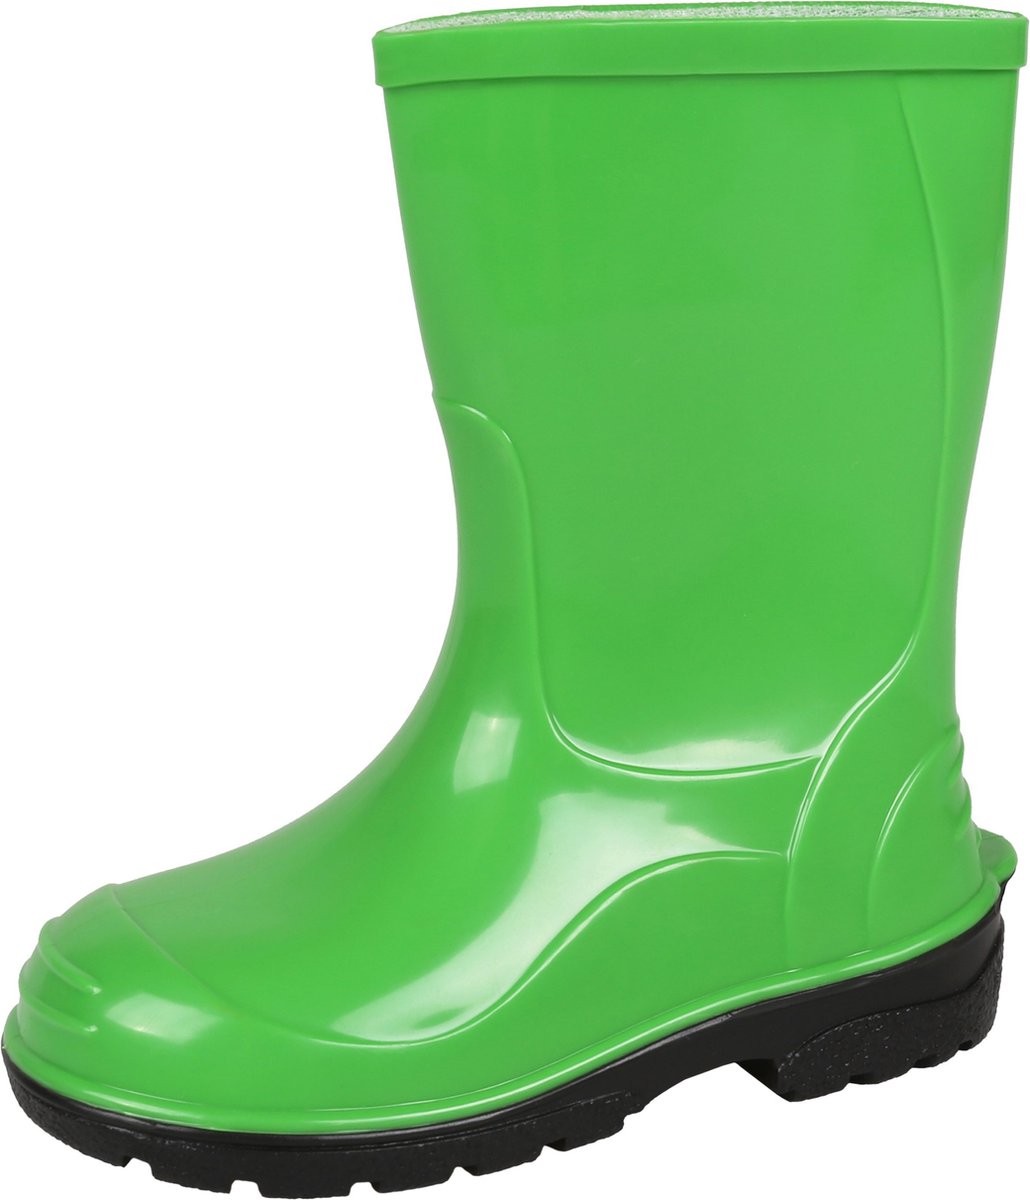 Groene laarzen van PVC materiaal, met antislipzool - OLI LEMIGO / 21